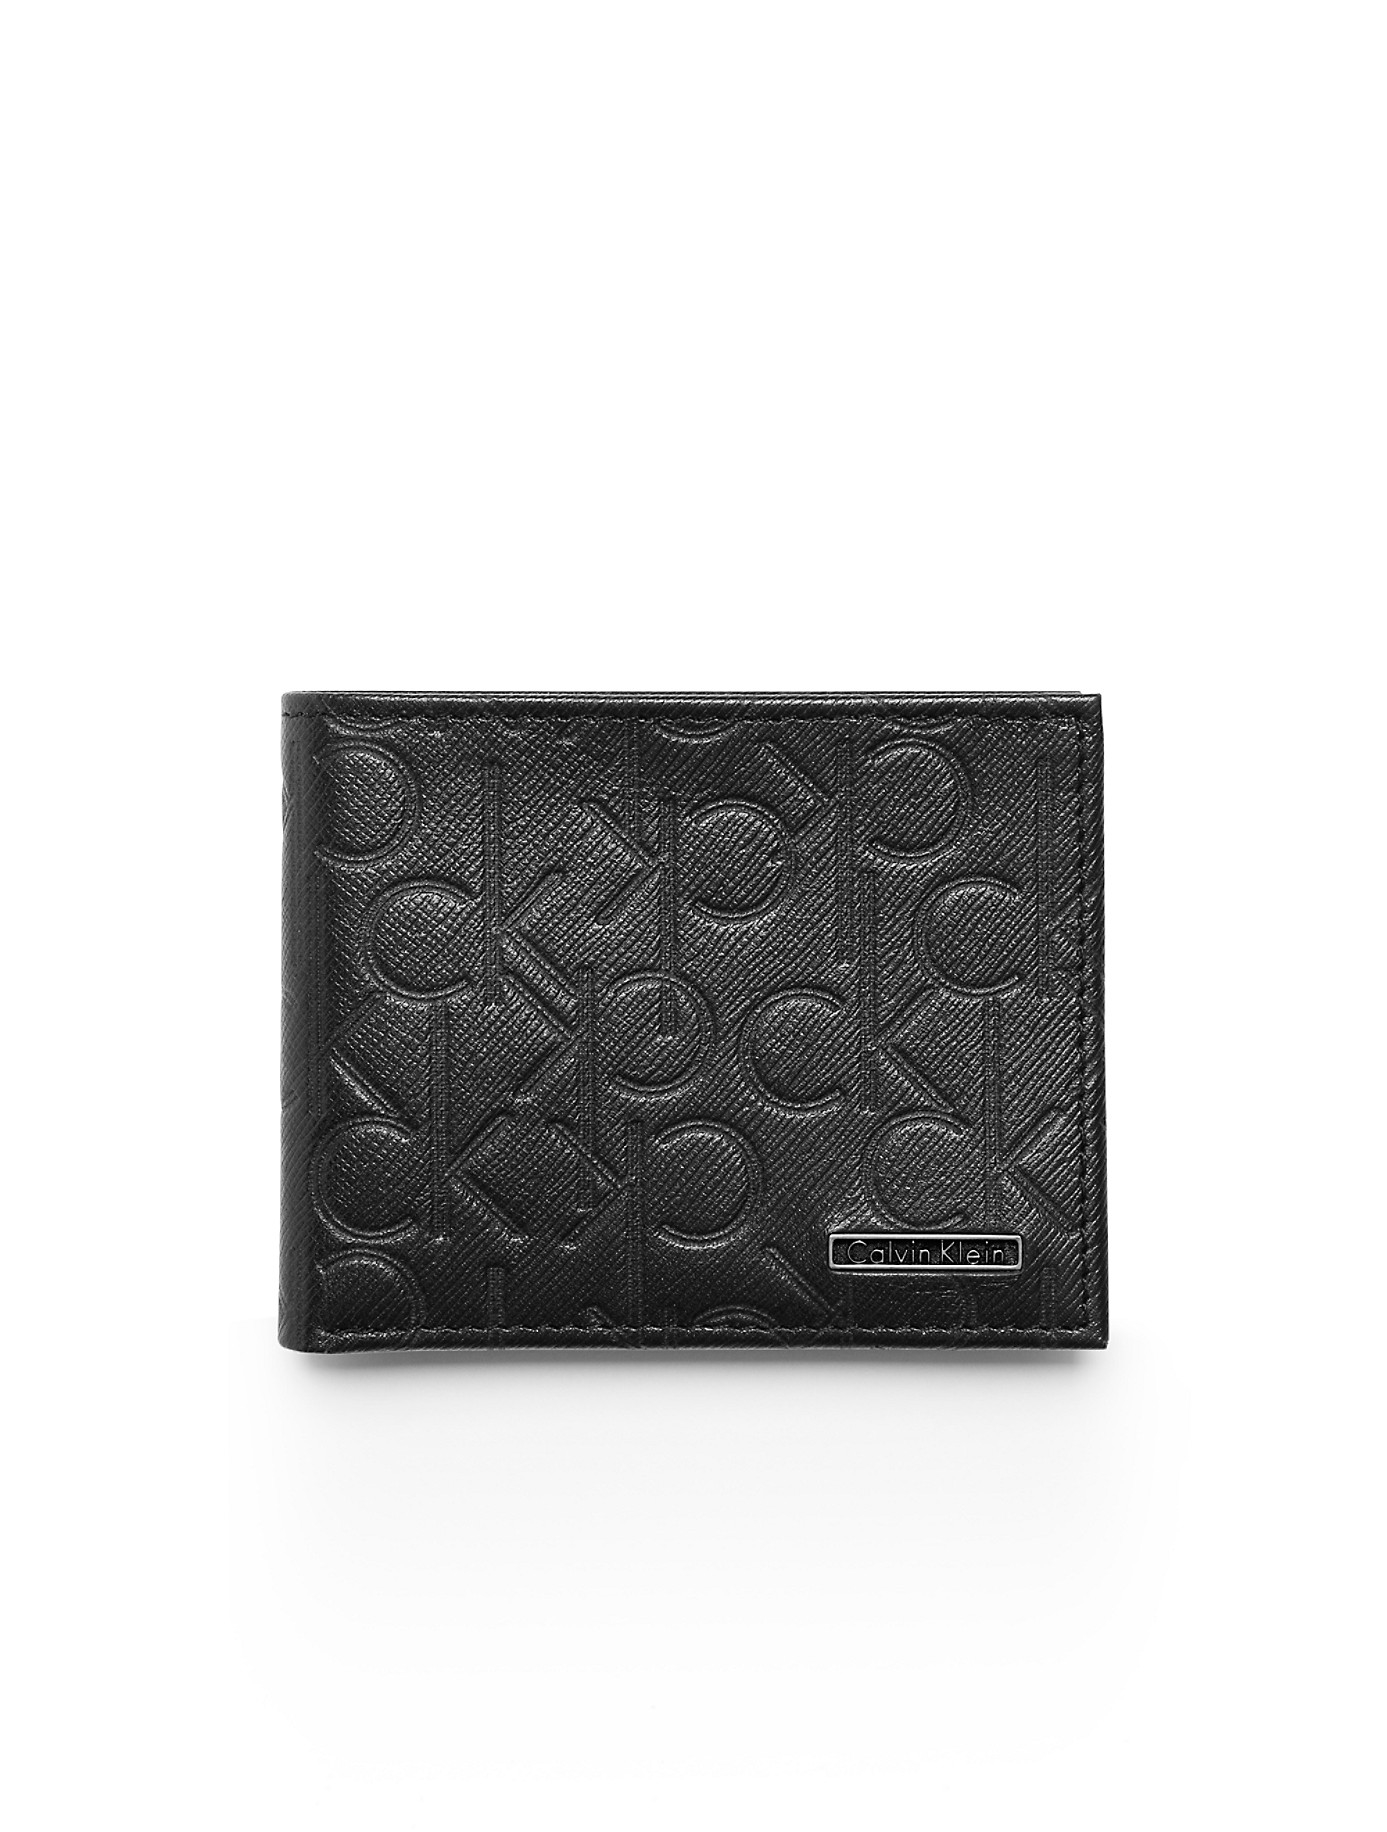 Lyst - Calvin Klein White Label Embossed Logo Slimfold Wallet in Black ...